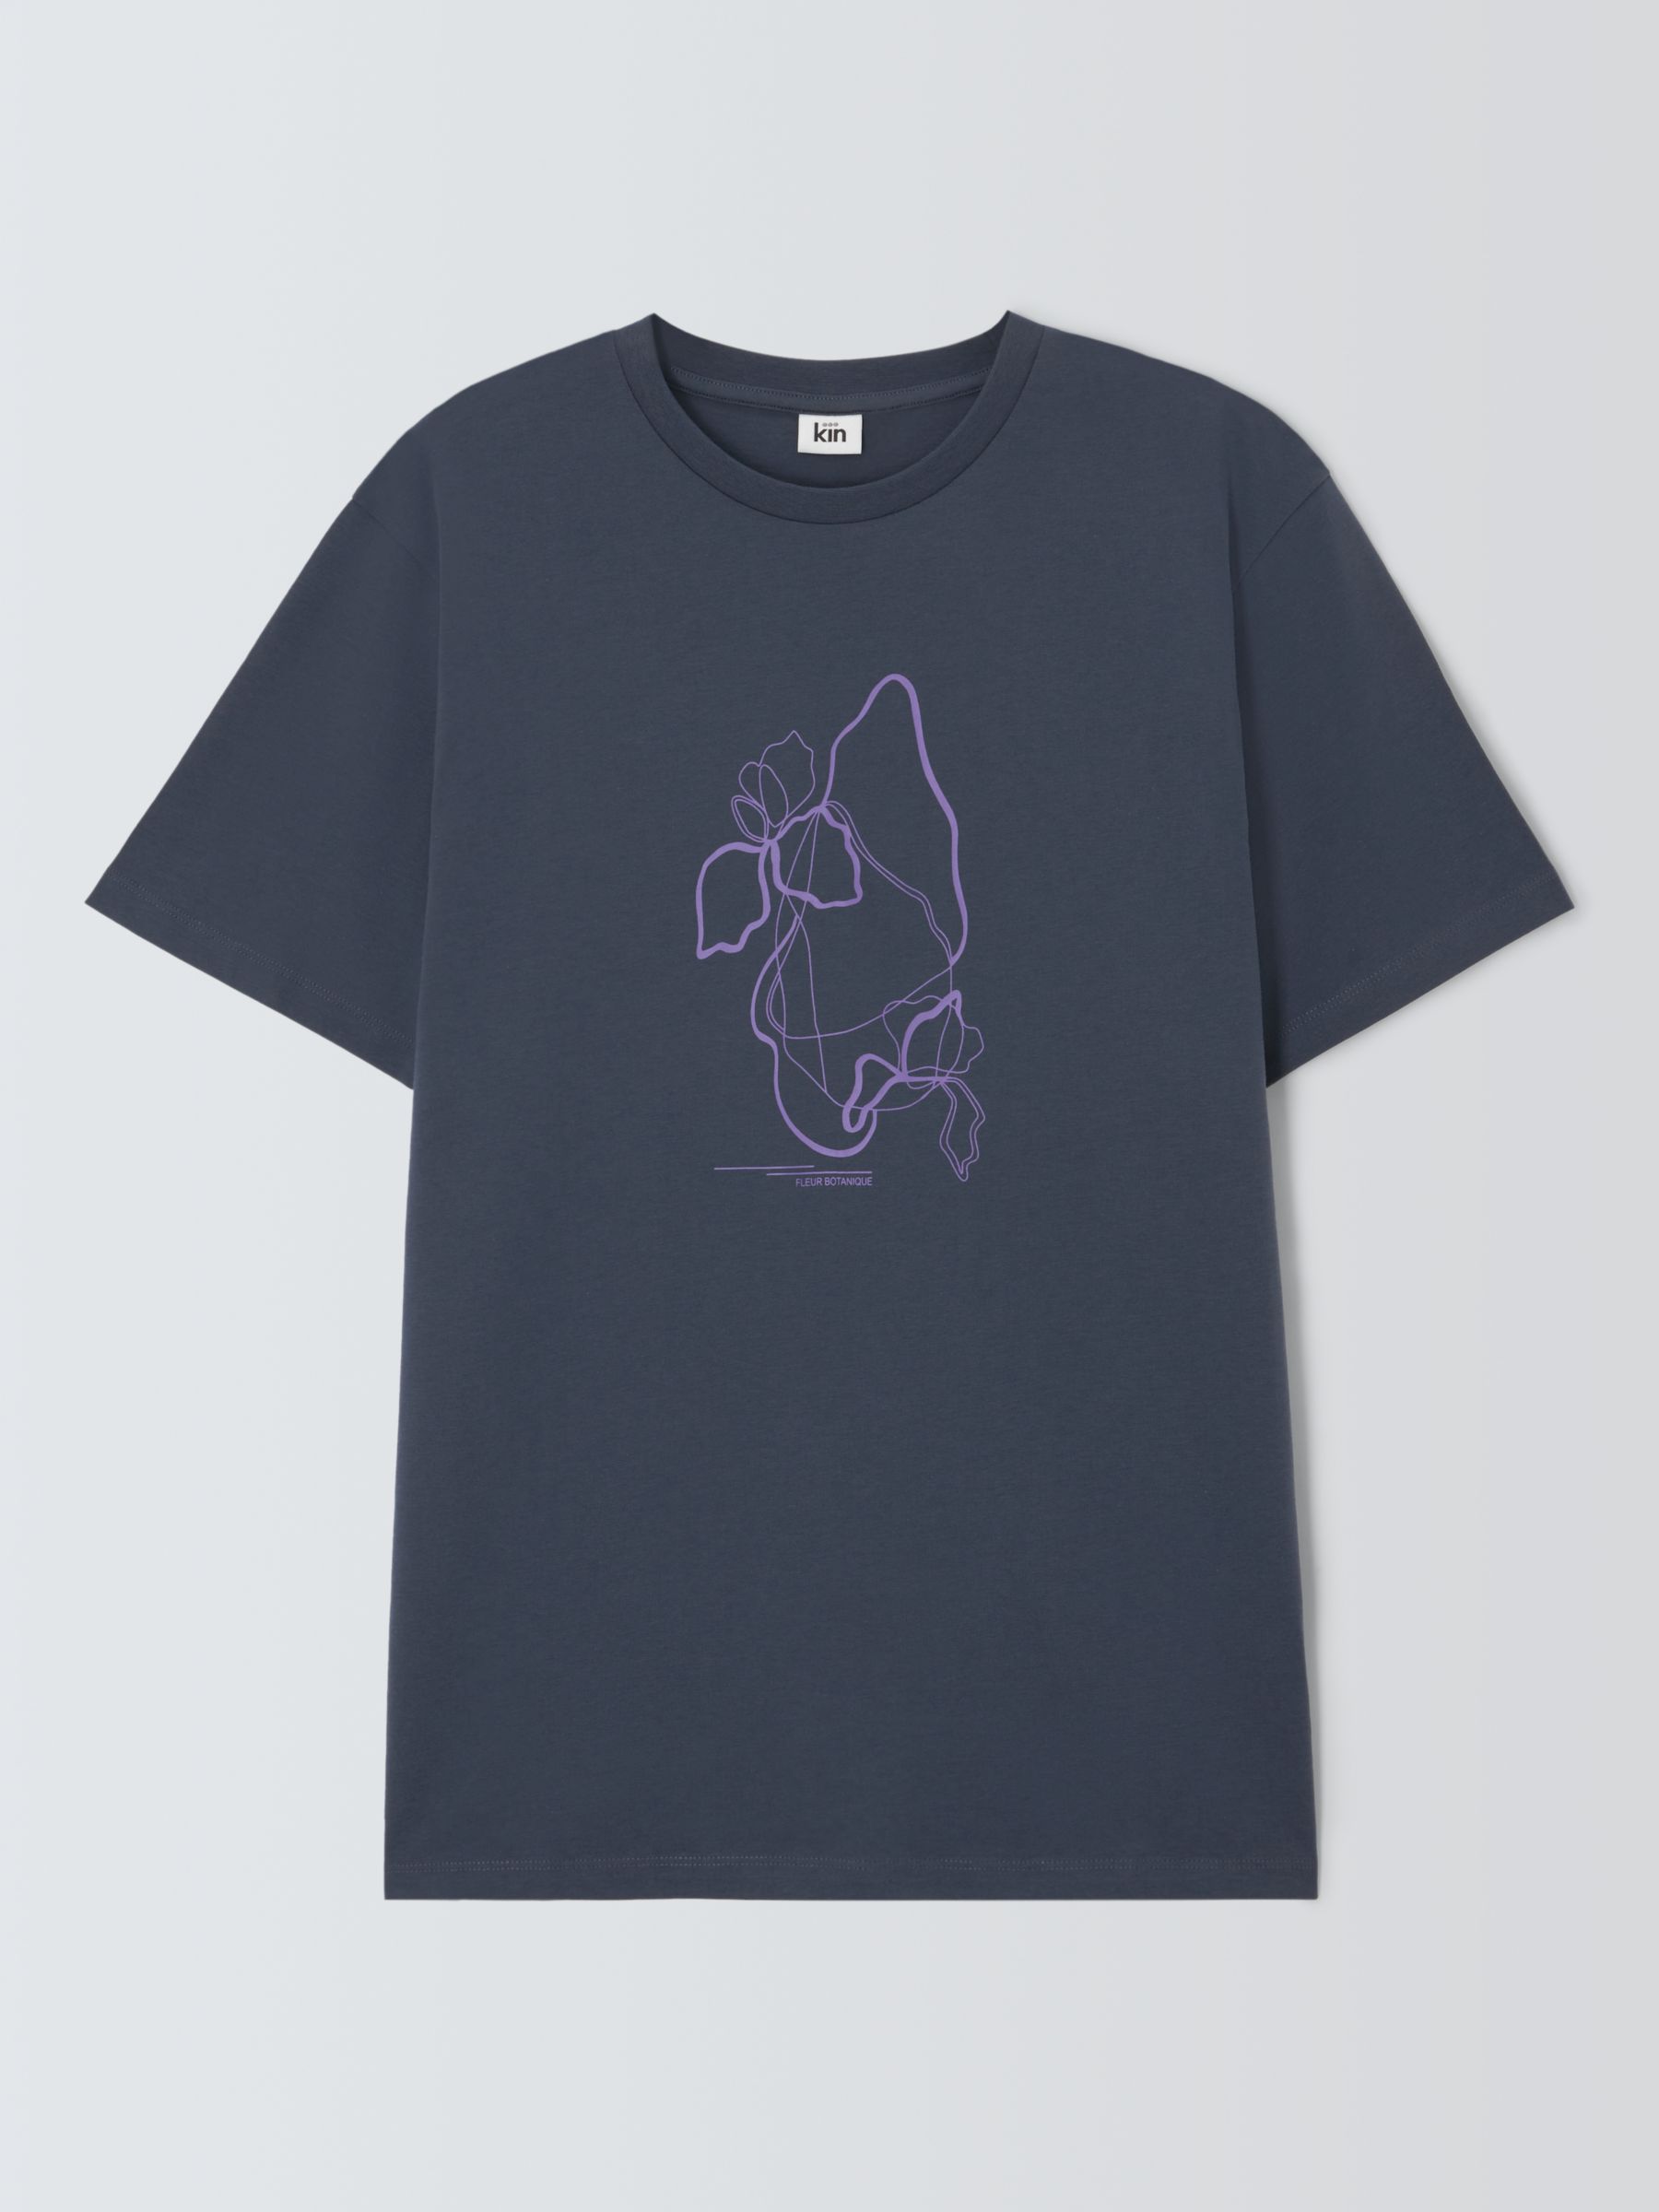 Kin Botanical T-Shirt, Grey/Purple, XXL